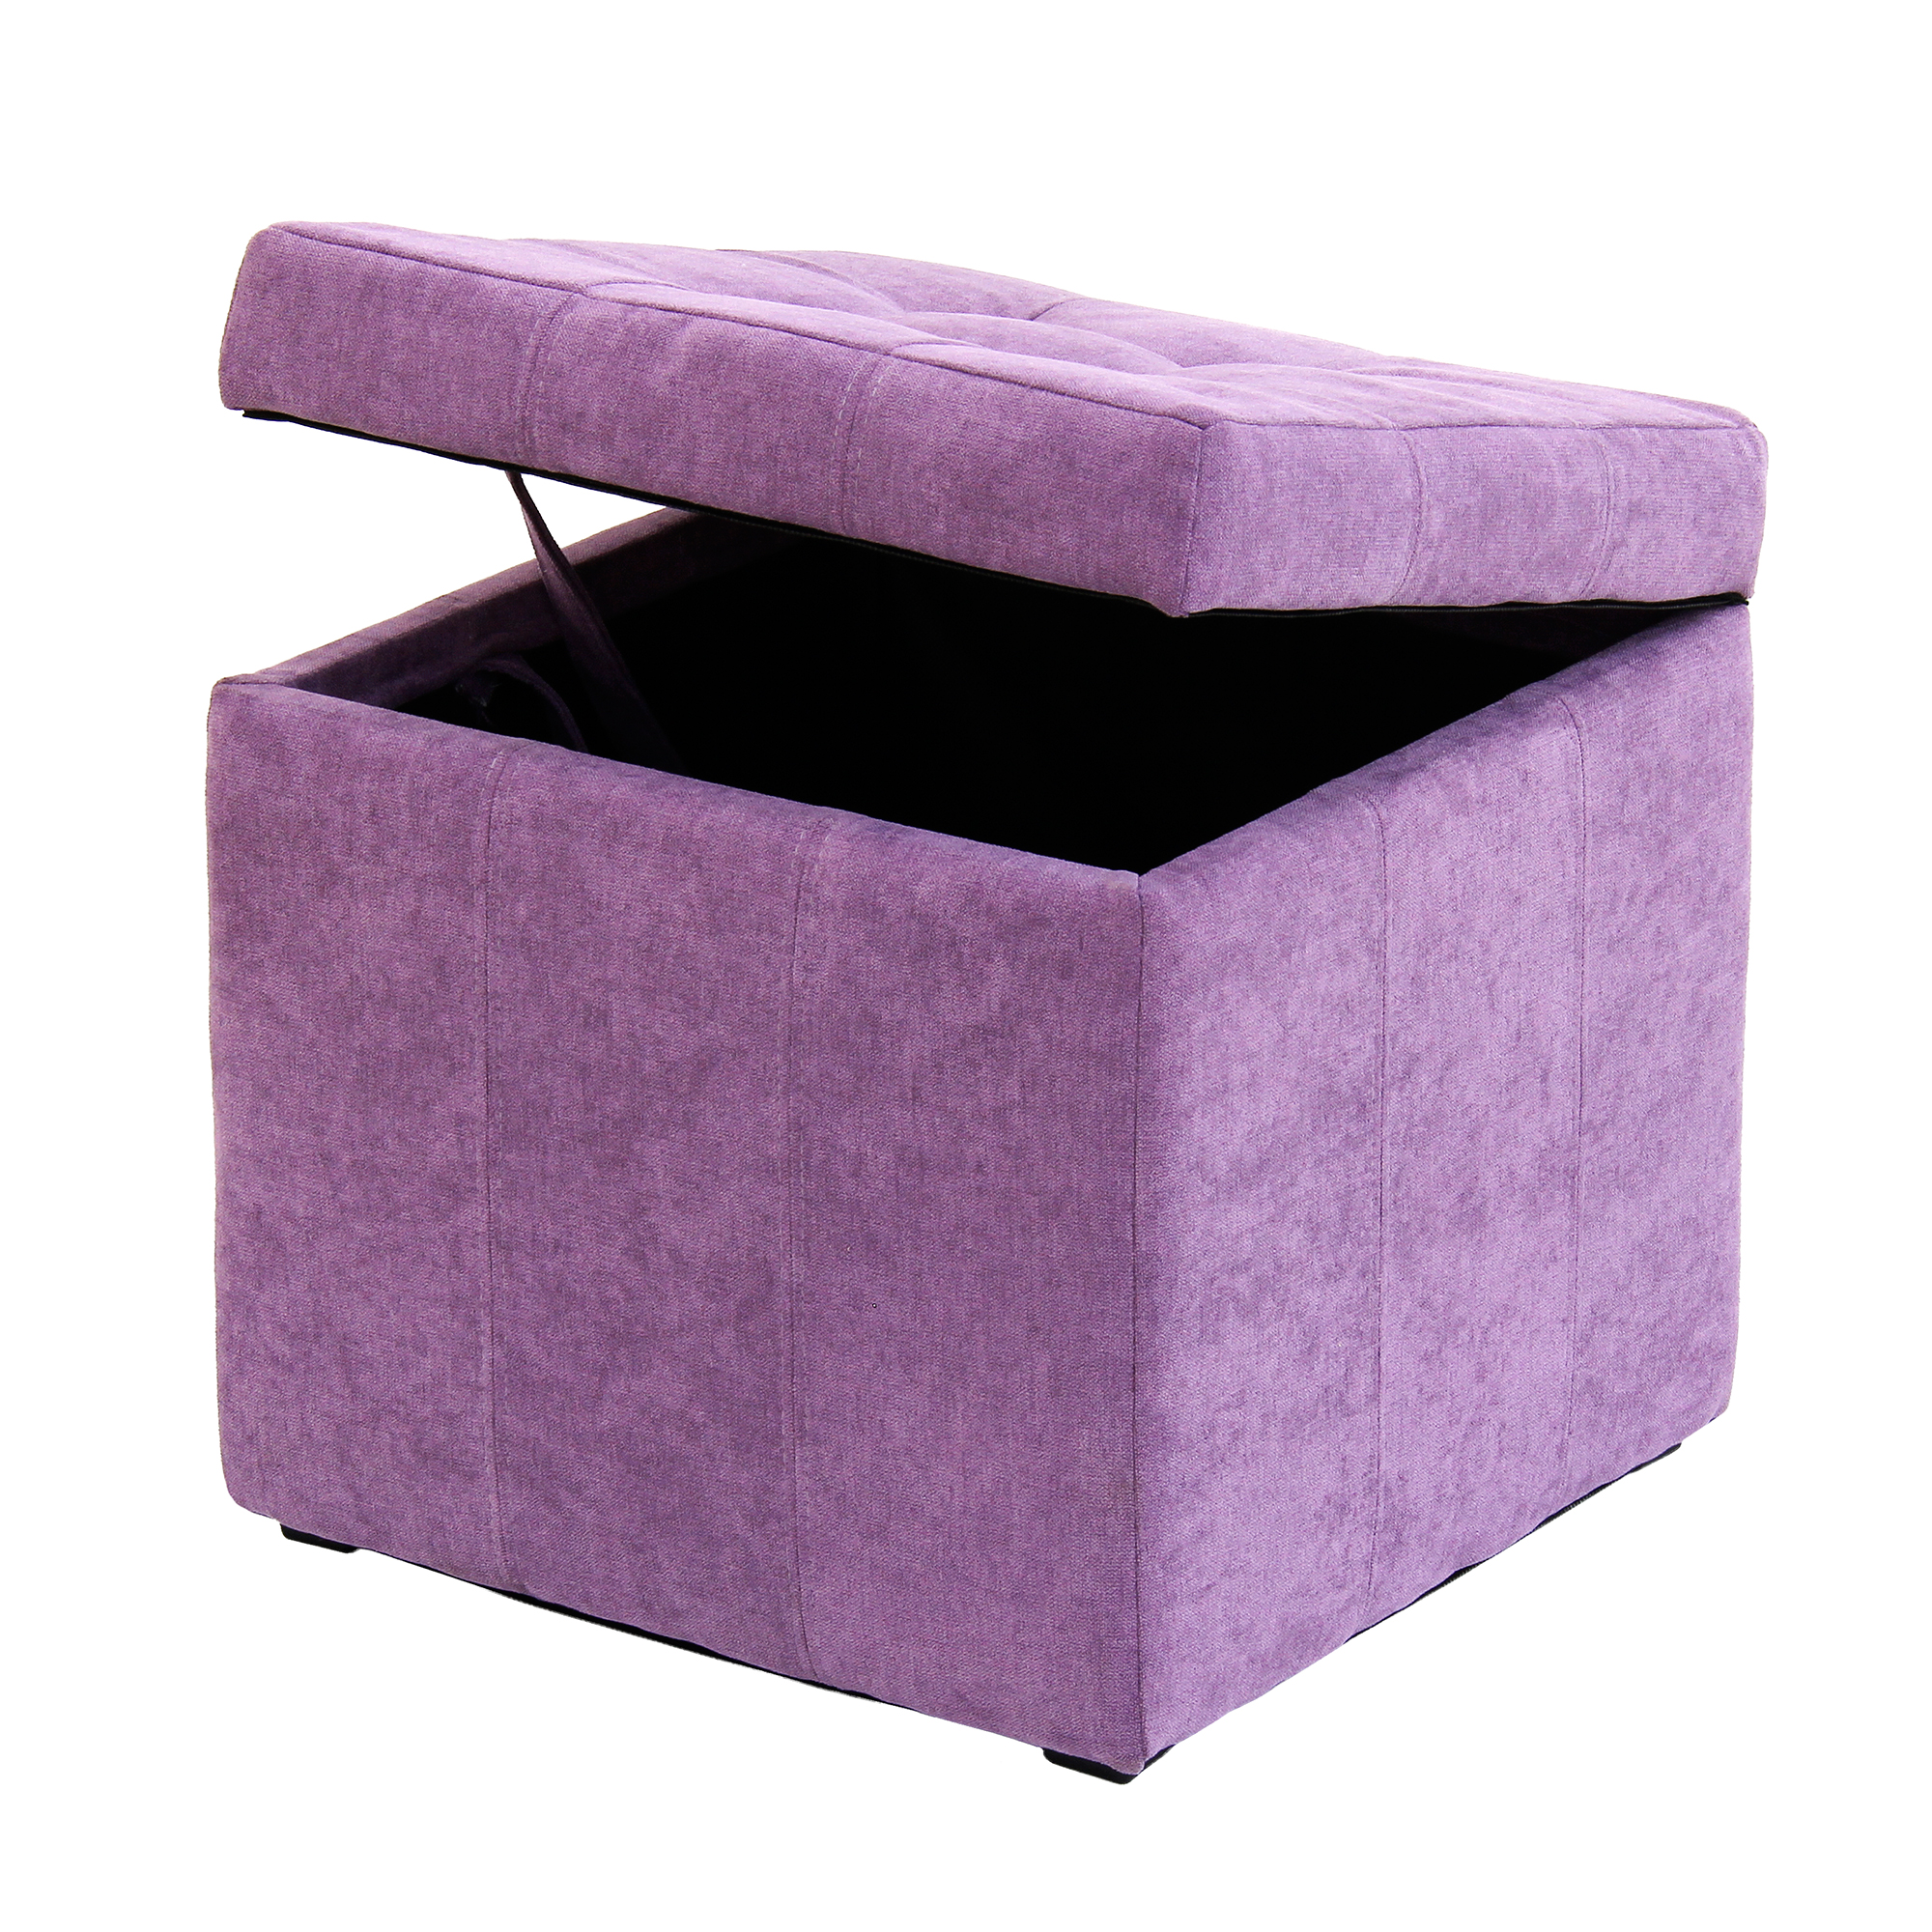 Банкетка Dreambag модерна фиолетовый велюр 46х46х46, размер 46х46х46 см - фото 3